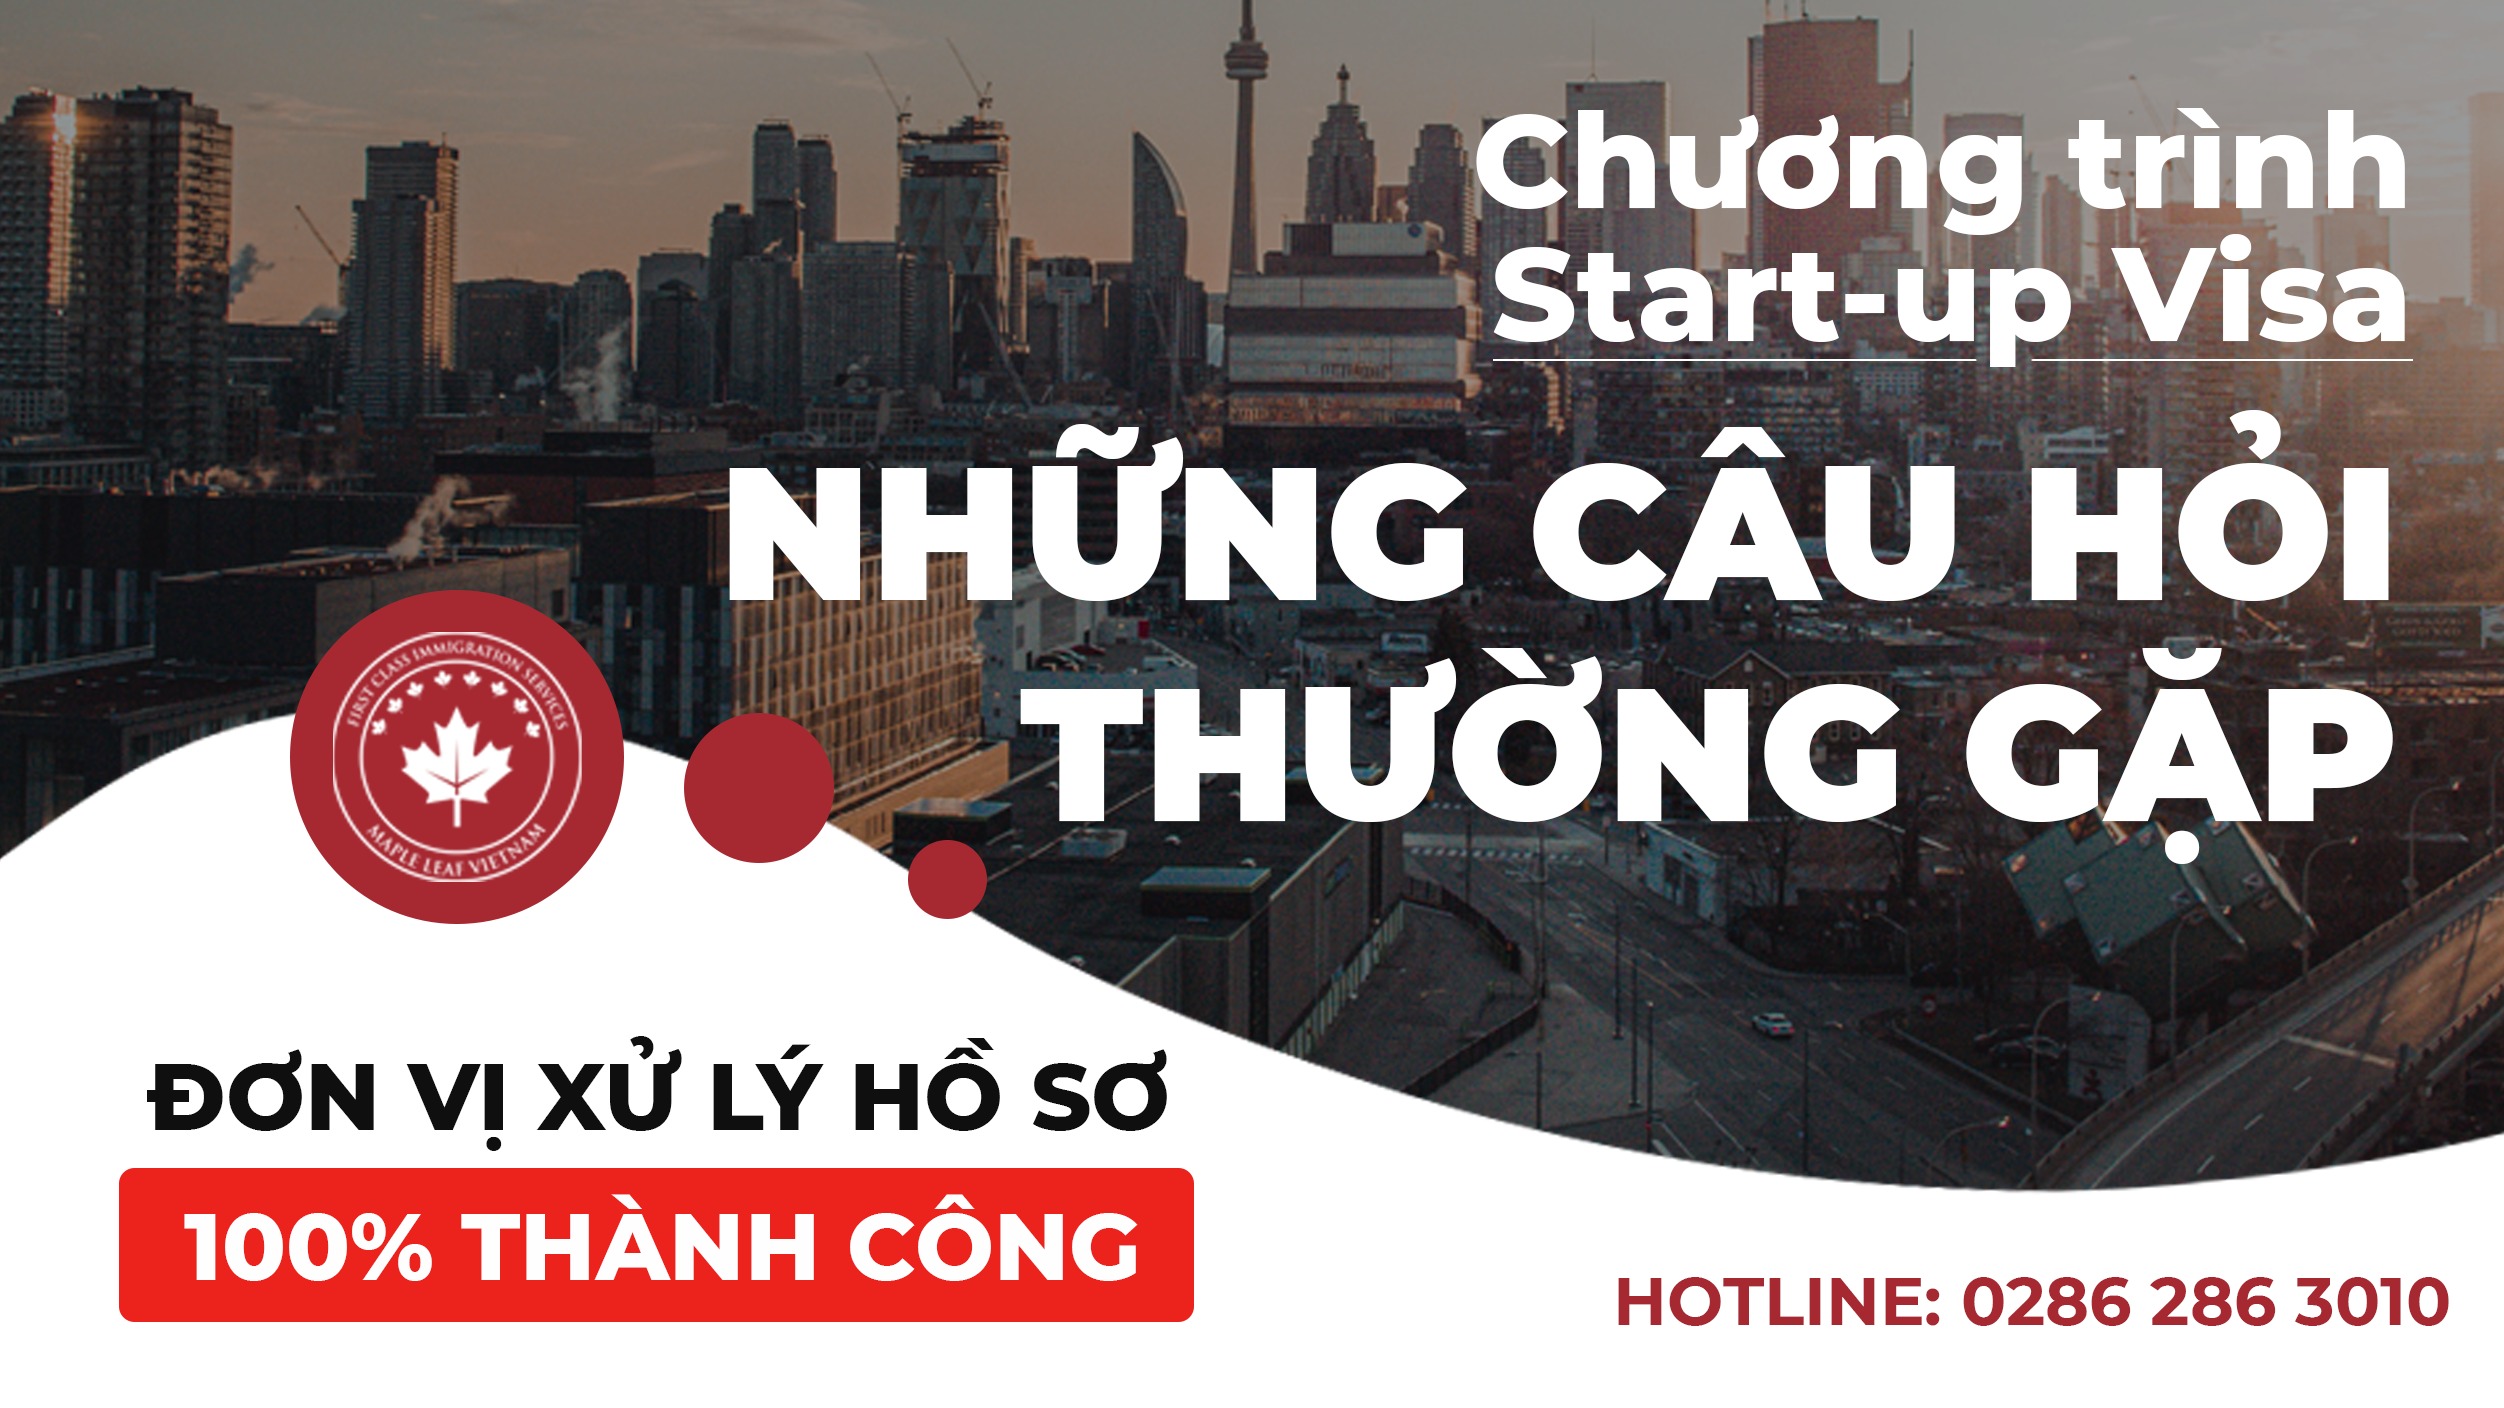 tong-hop-nhung-cau-hoi-thuong-gap-khi-khach-hang-chon-dinh-cu-theo-chuong-trinh-start-up-visa